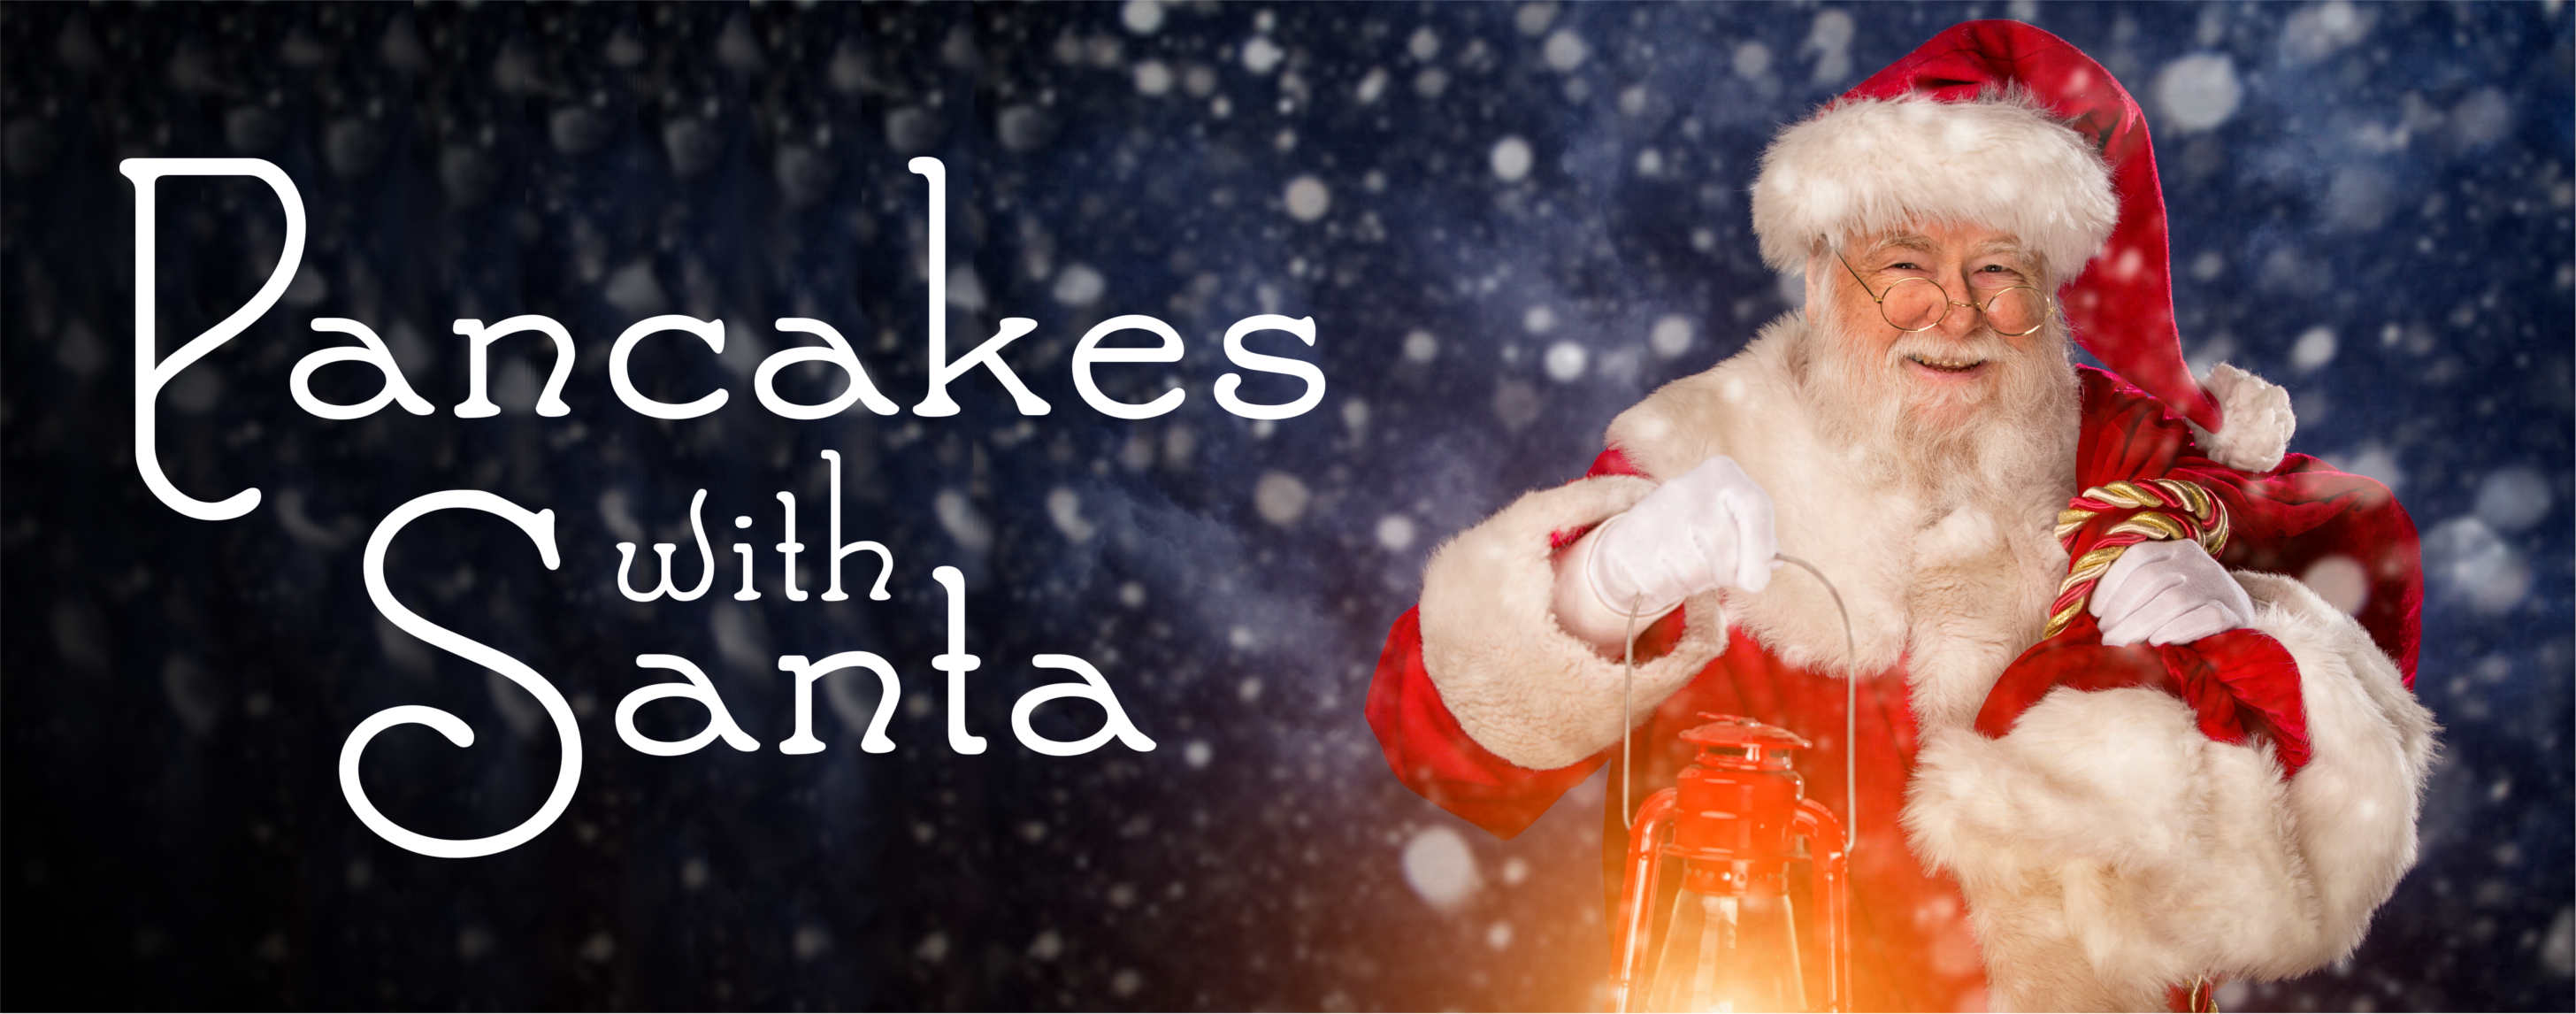 Pancakes with Santa December 6 Nashville